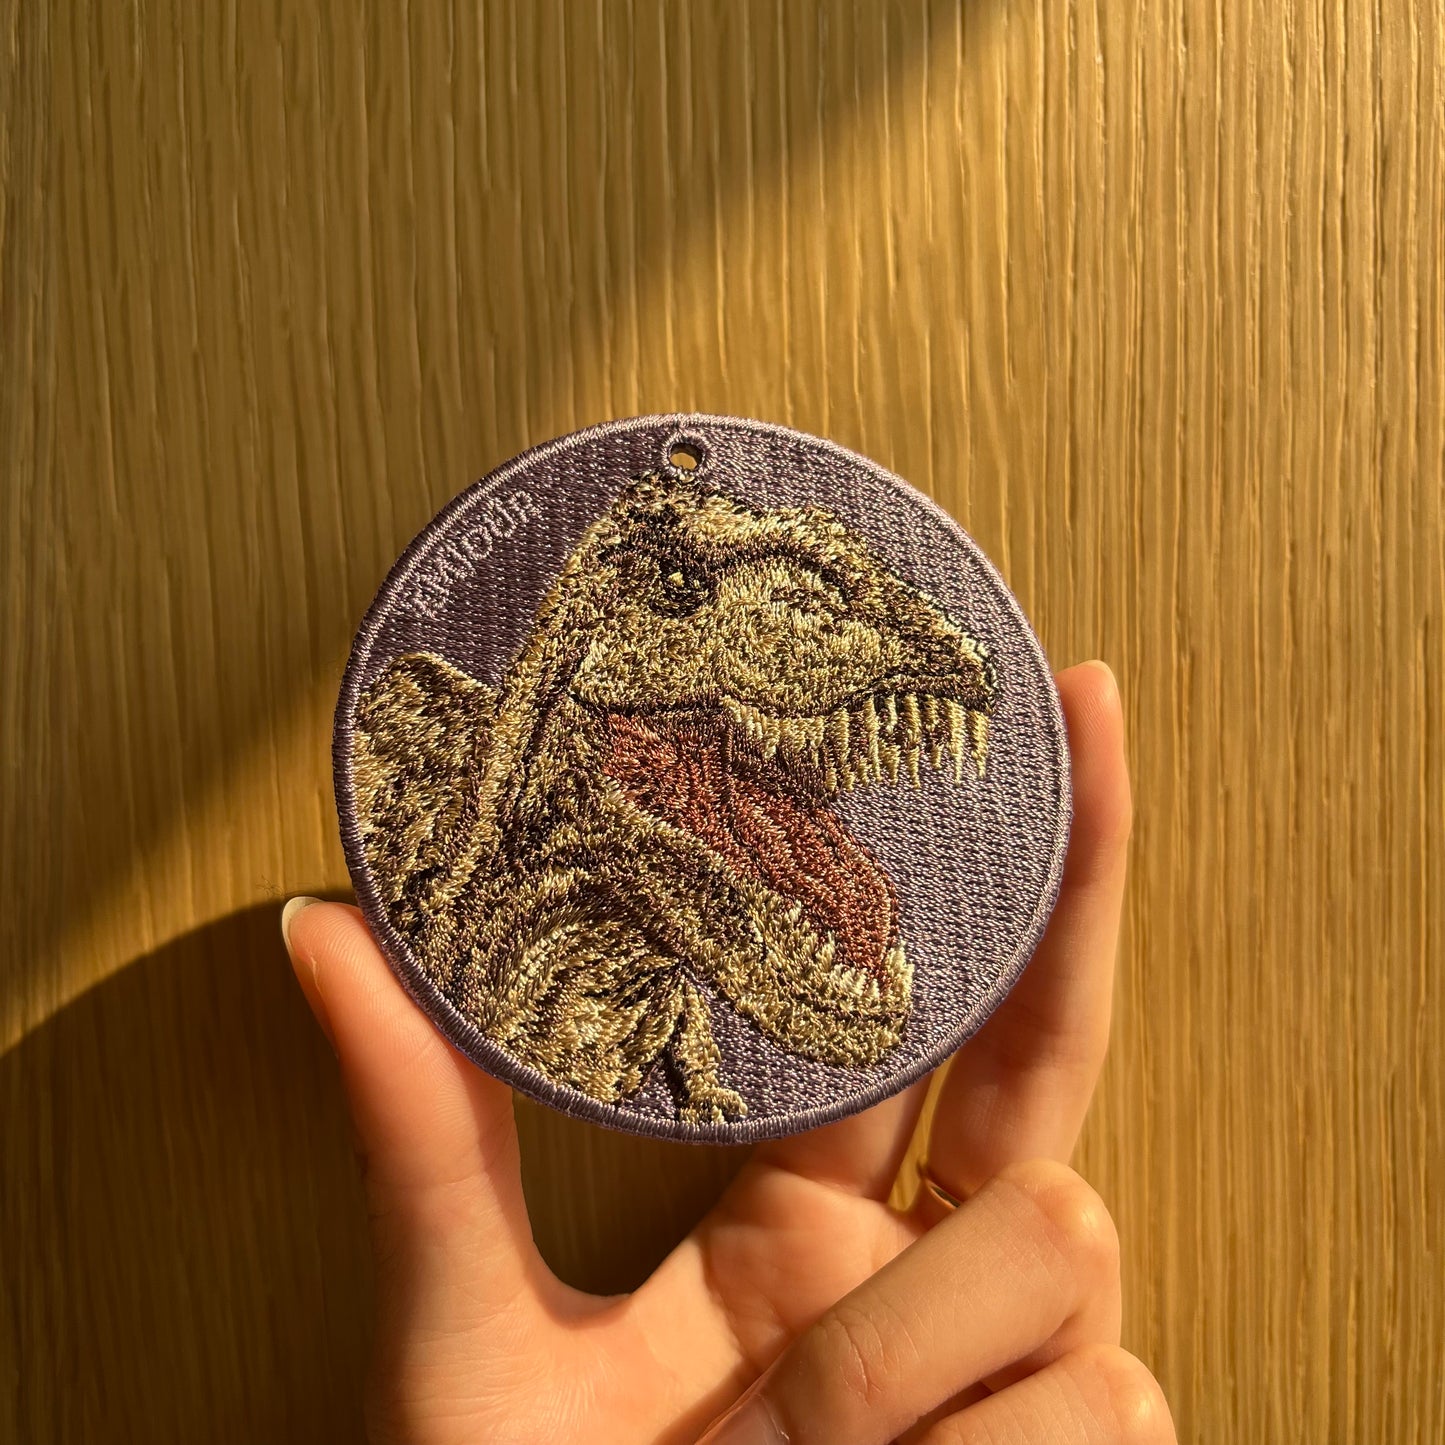 Double-sided embroidery pendant-Tyrannosaurus